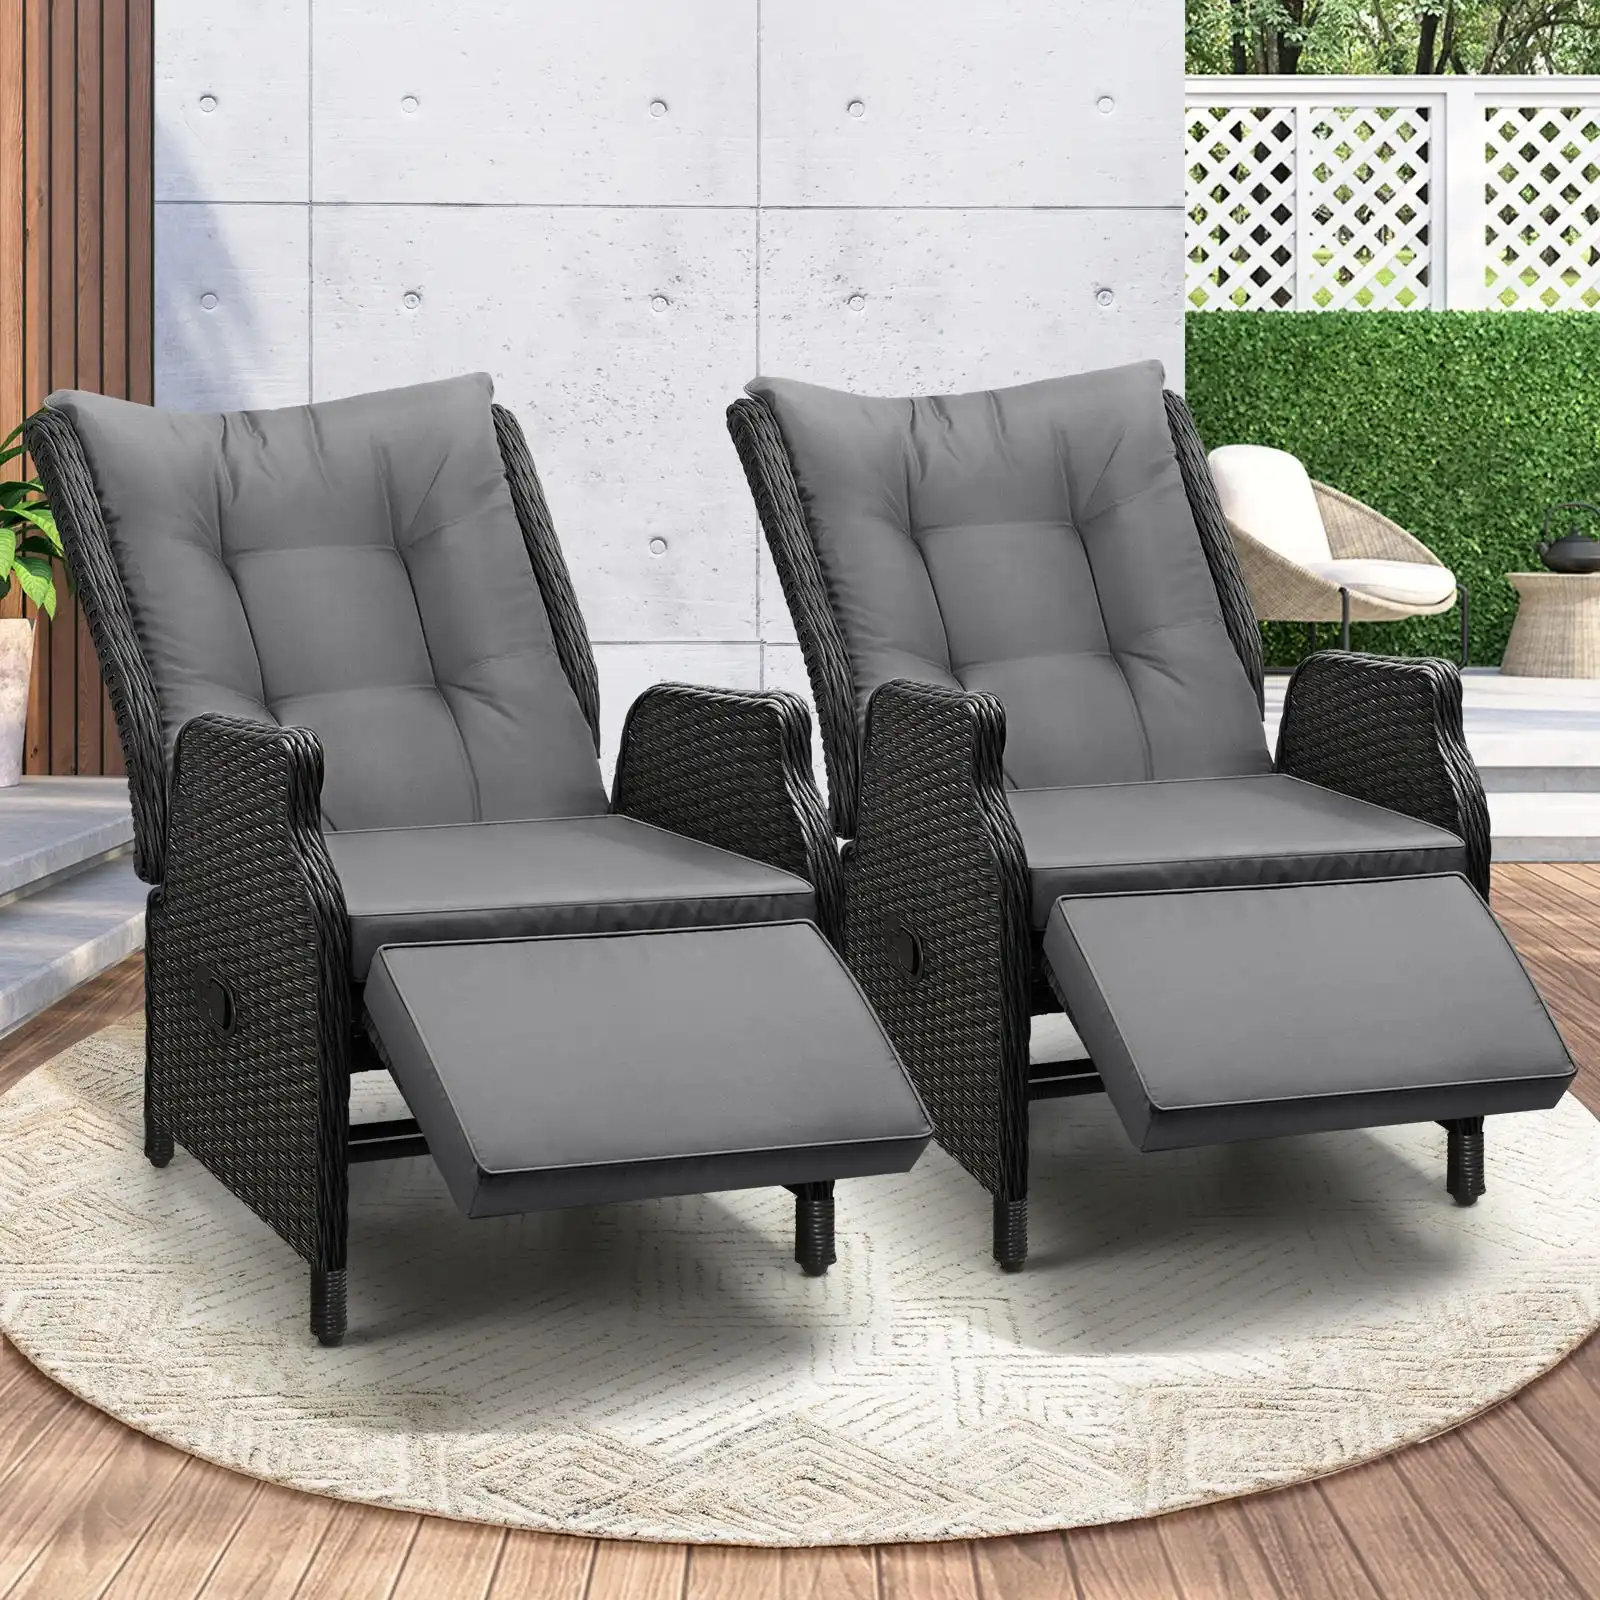 Livsip Sun Lounge Recliner Chairs Outdoor Furniture Patio Wicker Sofa 2 Piece